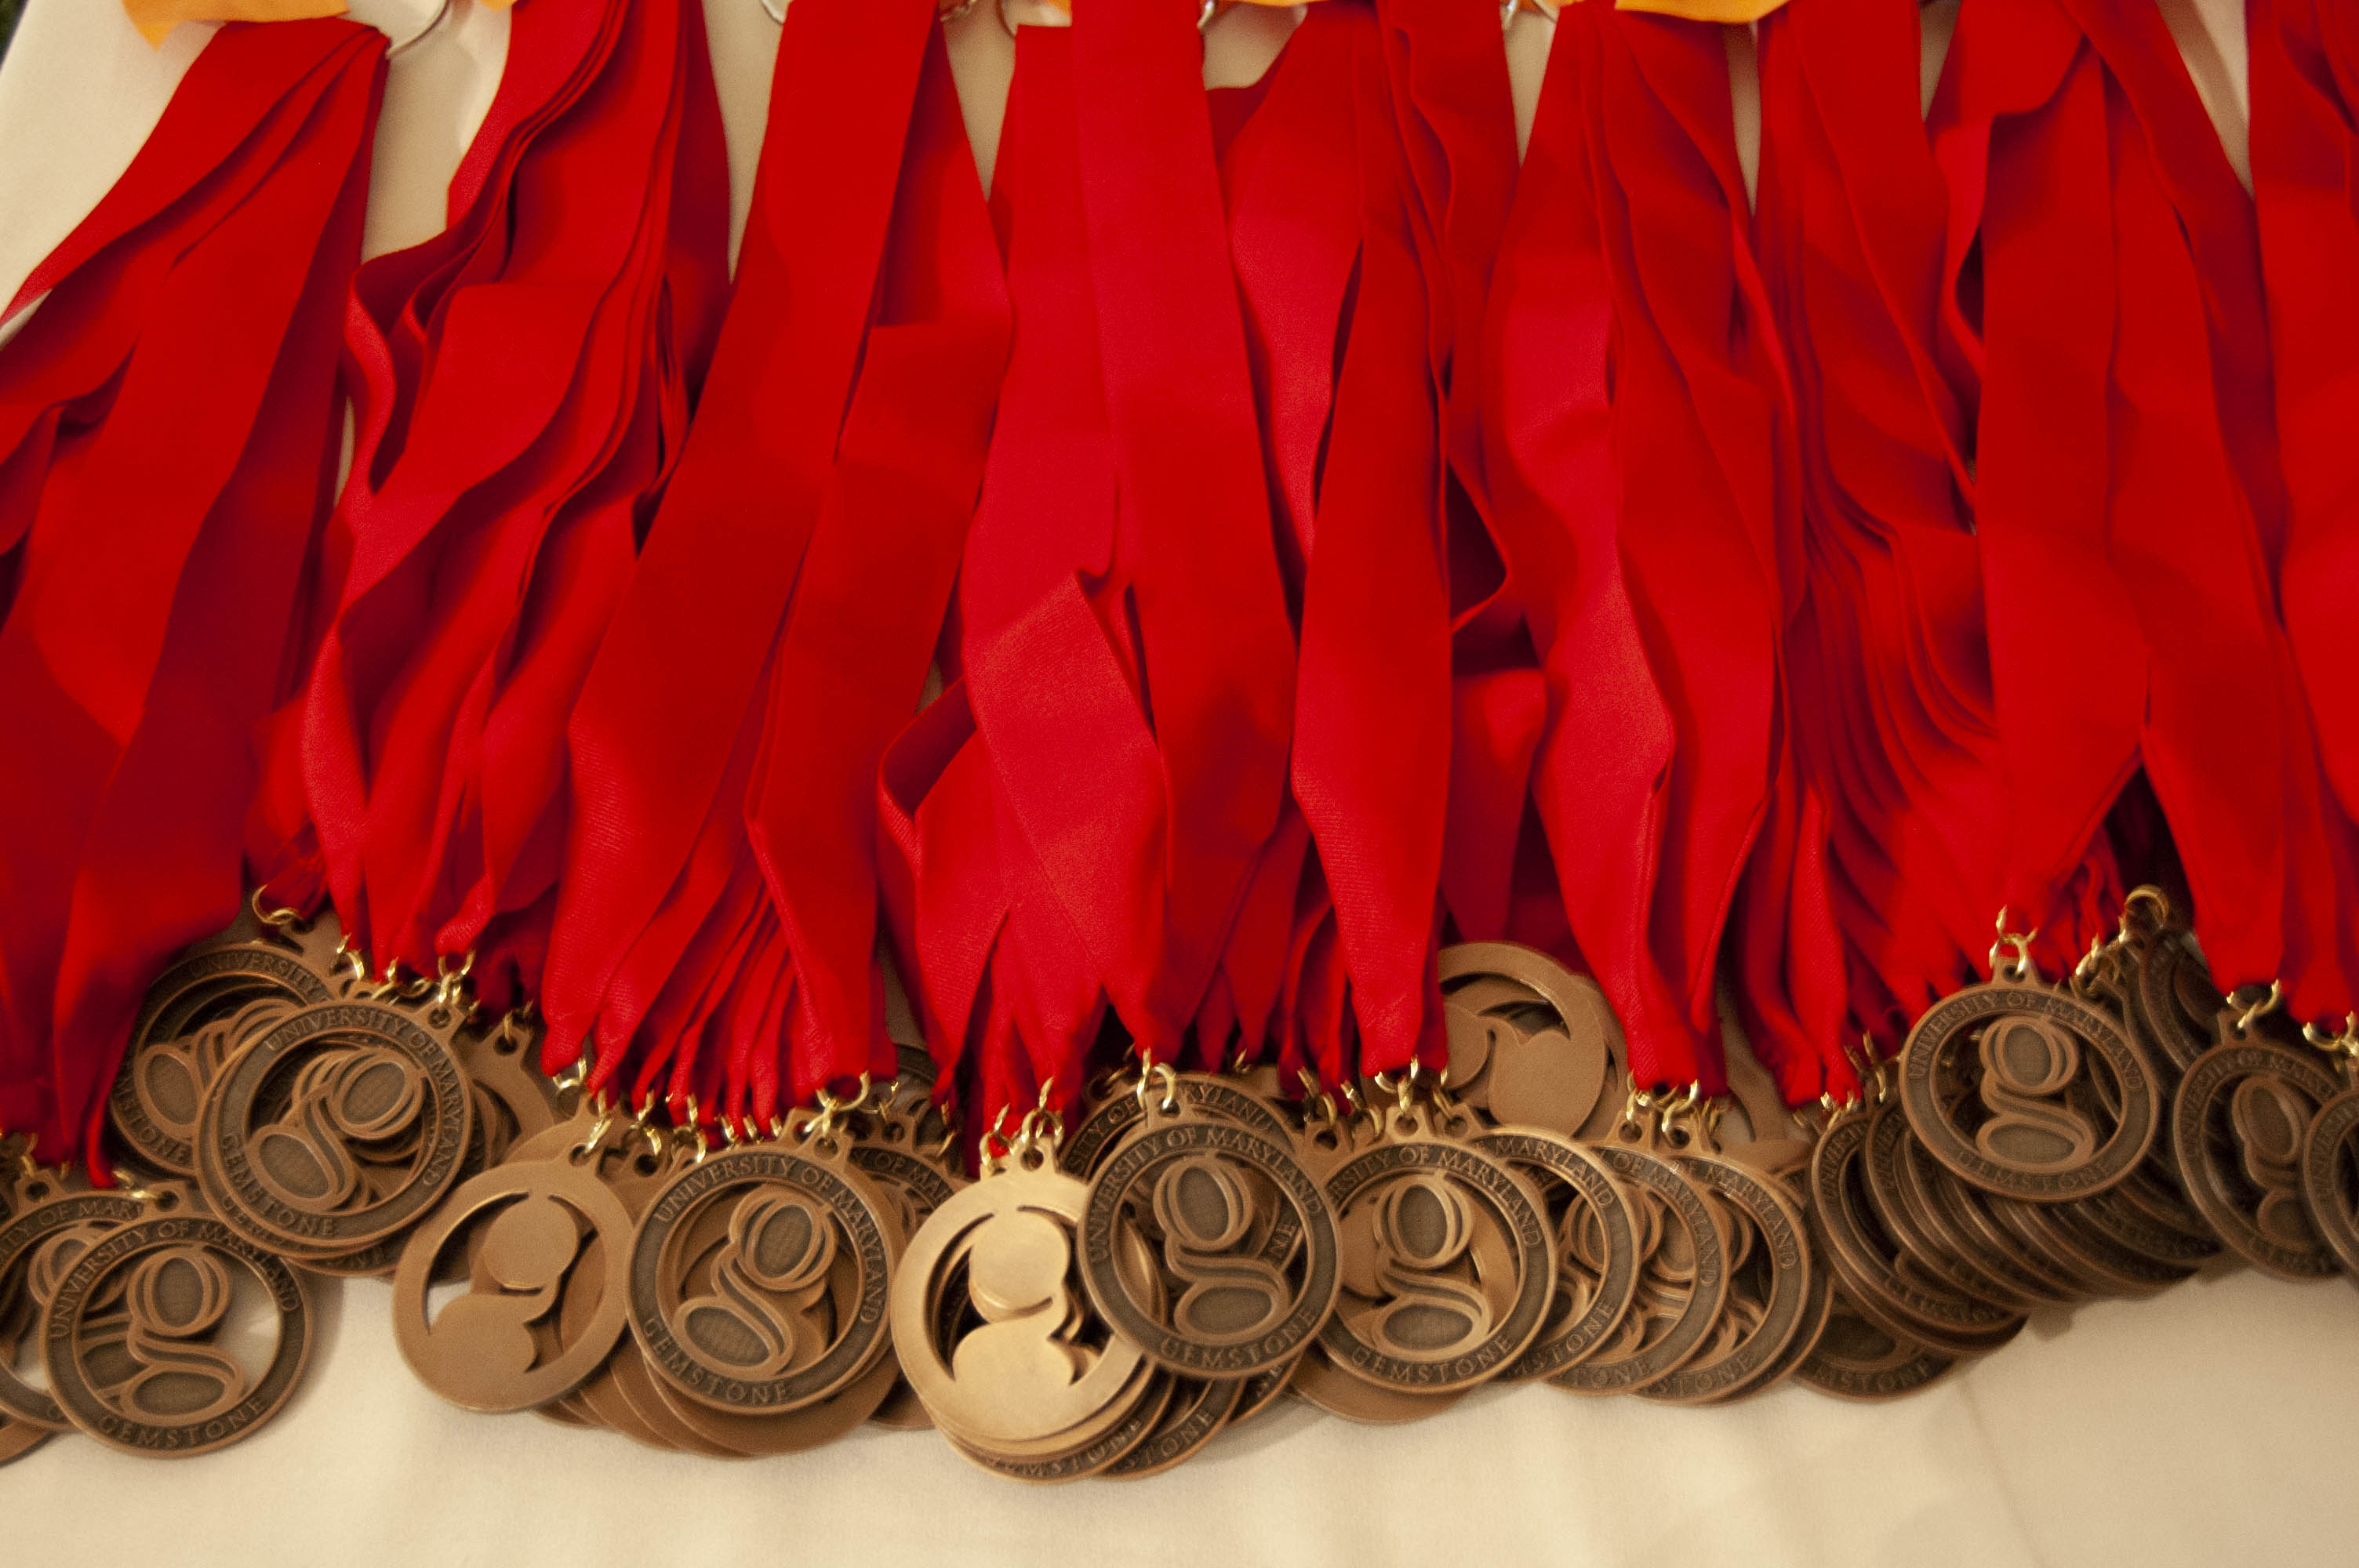 display of gemstone awards on ribbons